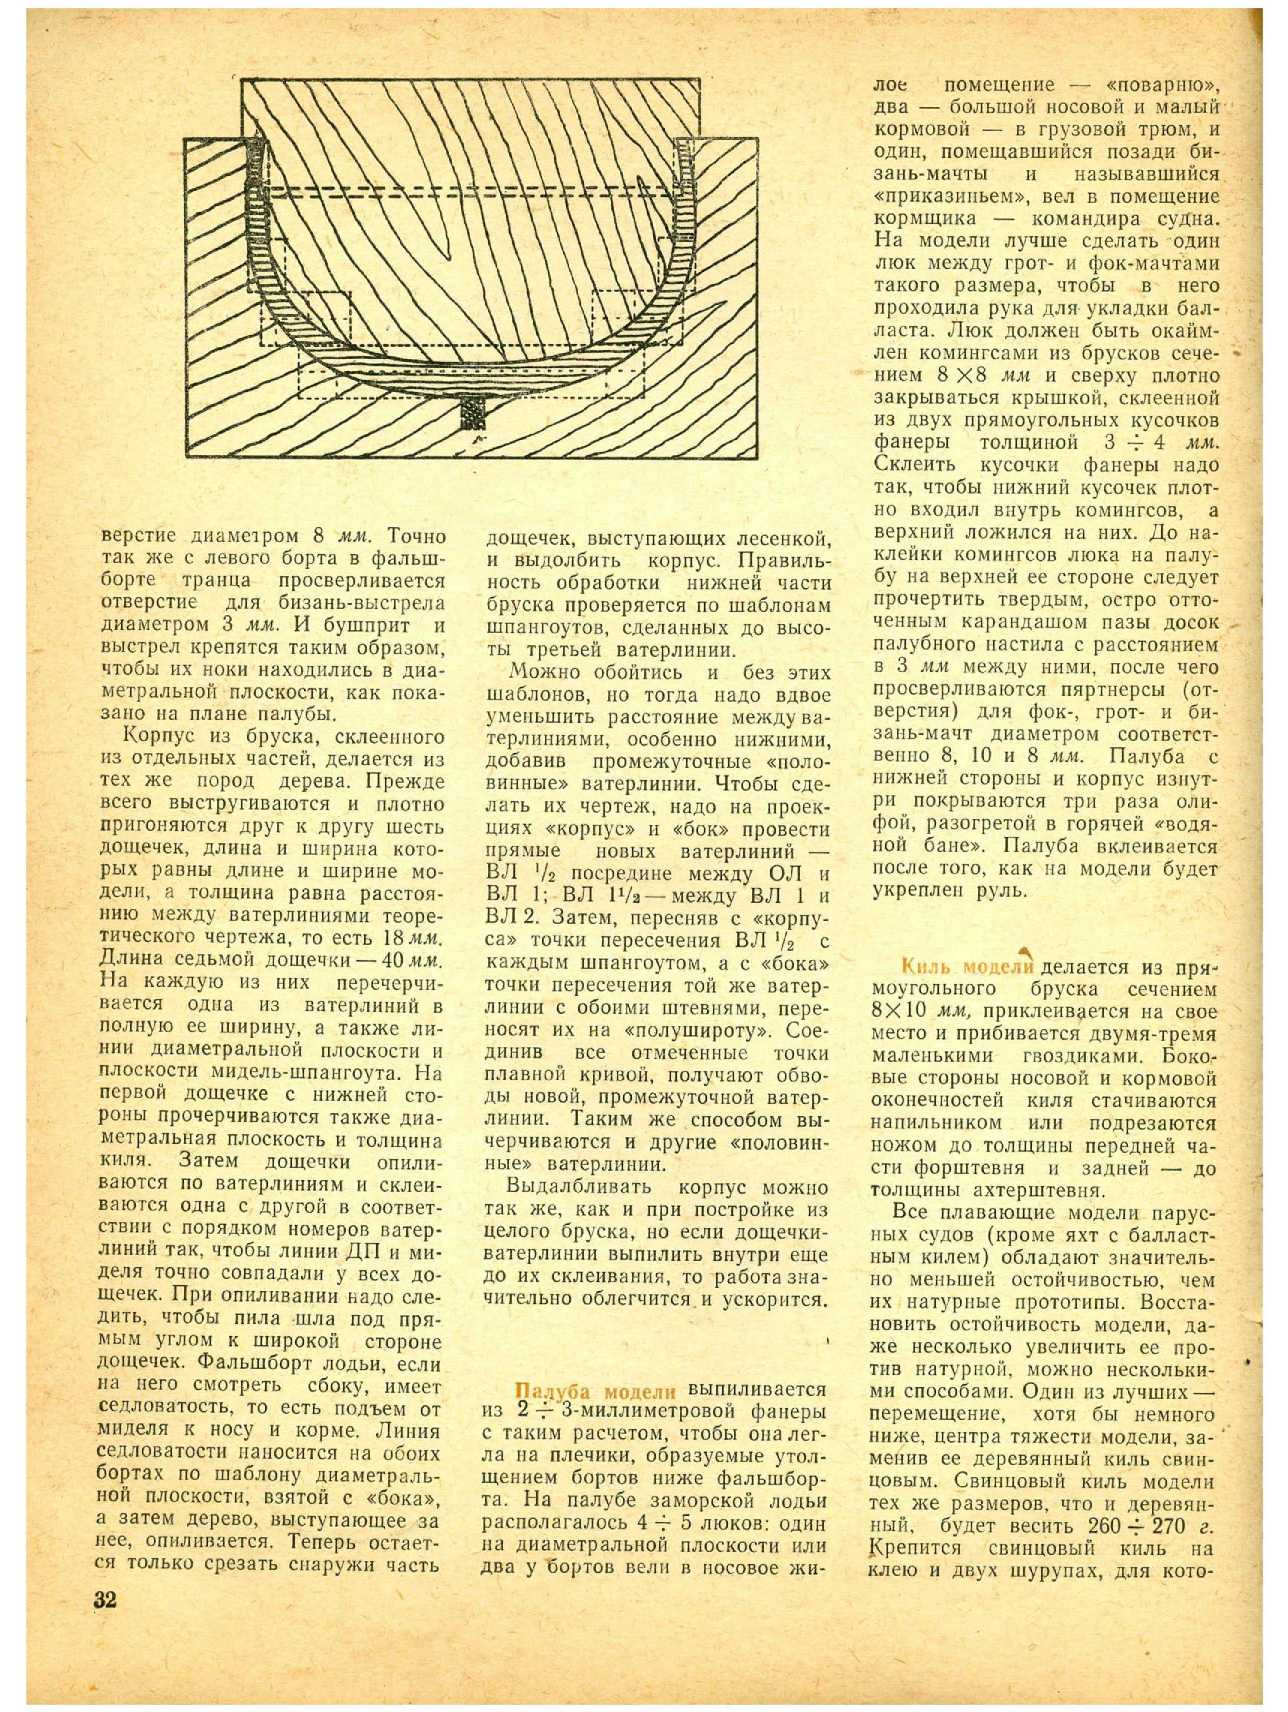 ЮМК 13, 1965, 32 c.